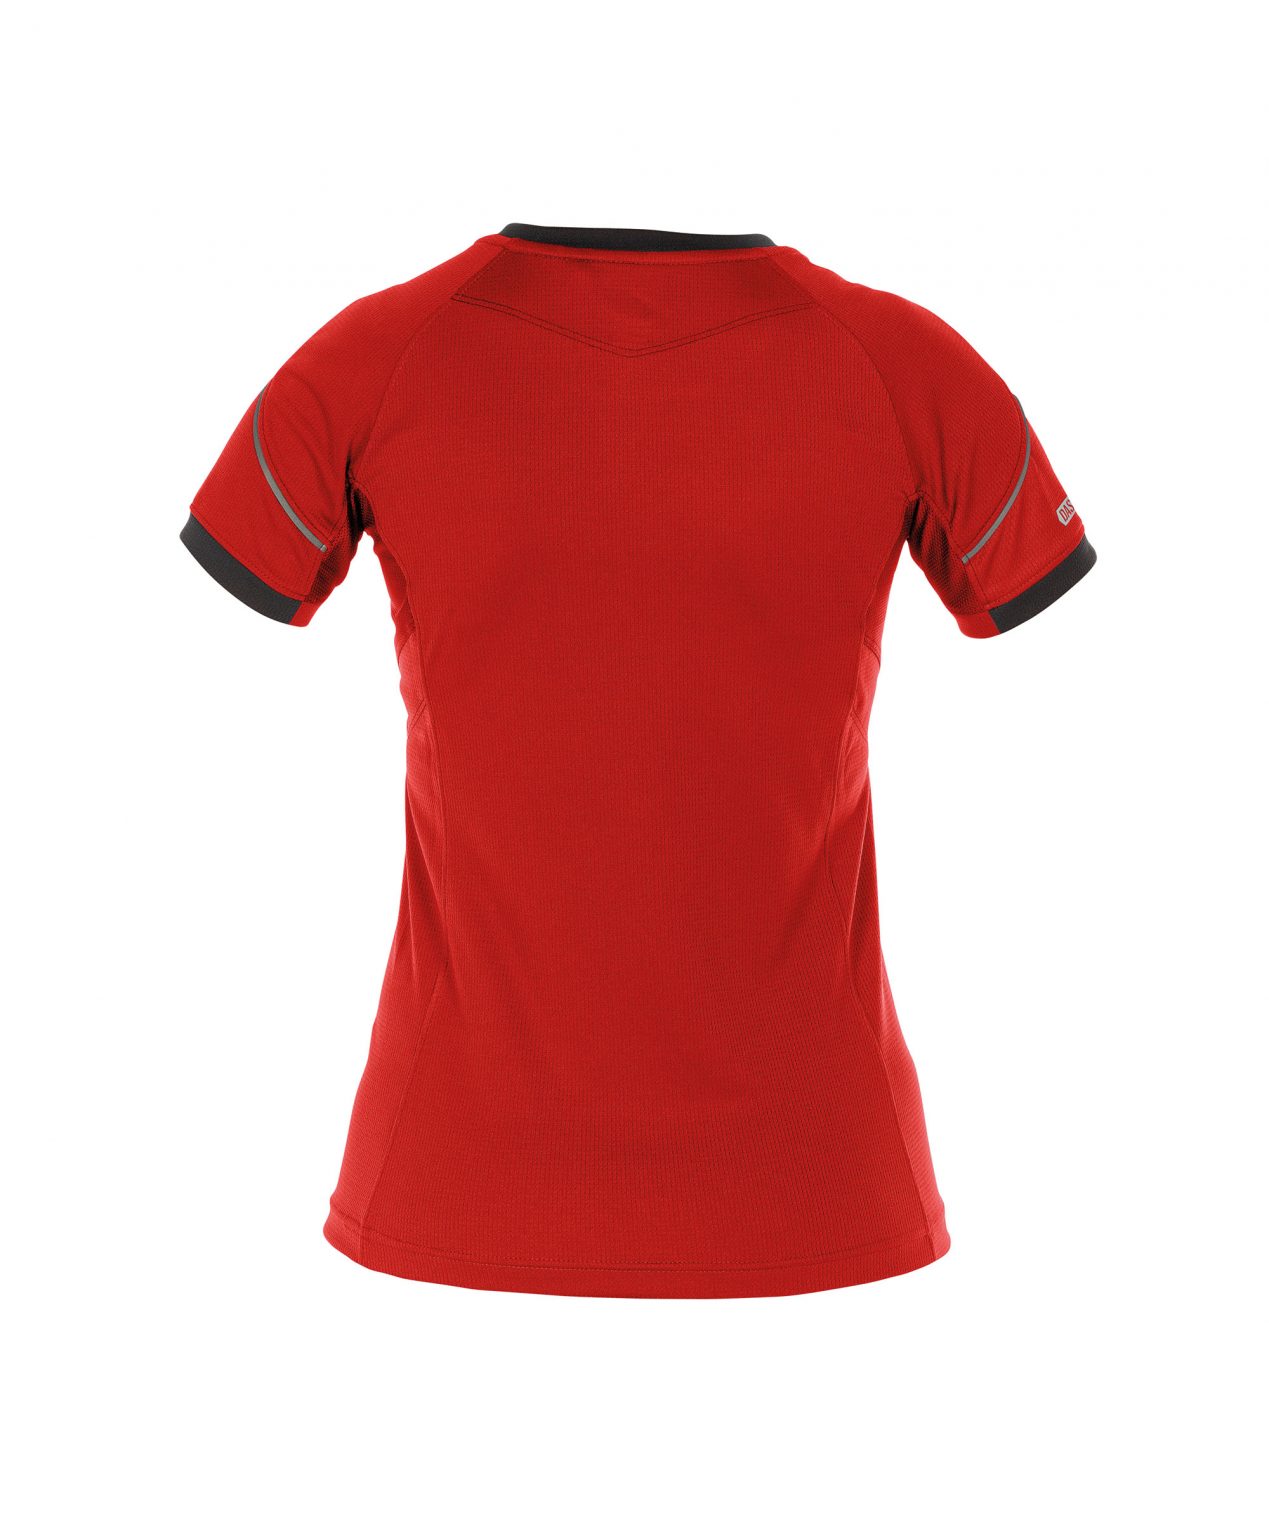 nexus women t shirt red black back